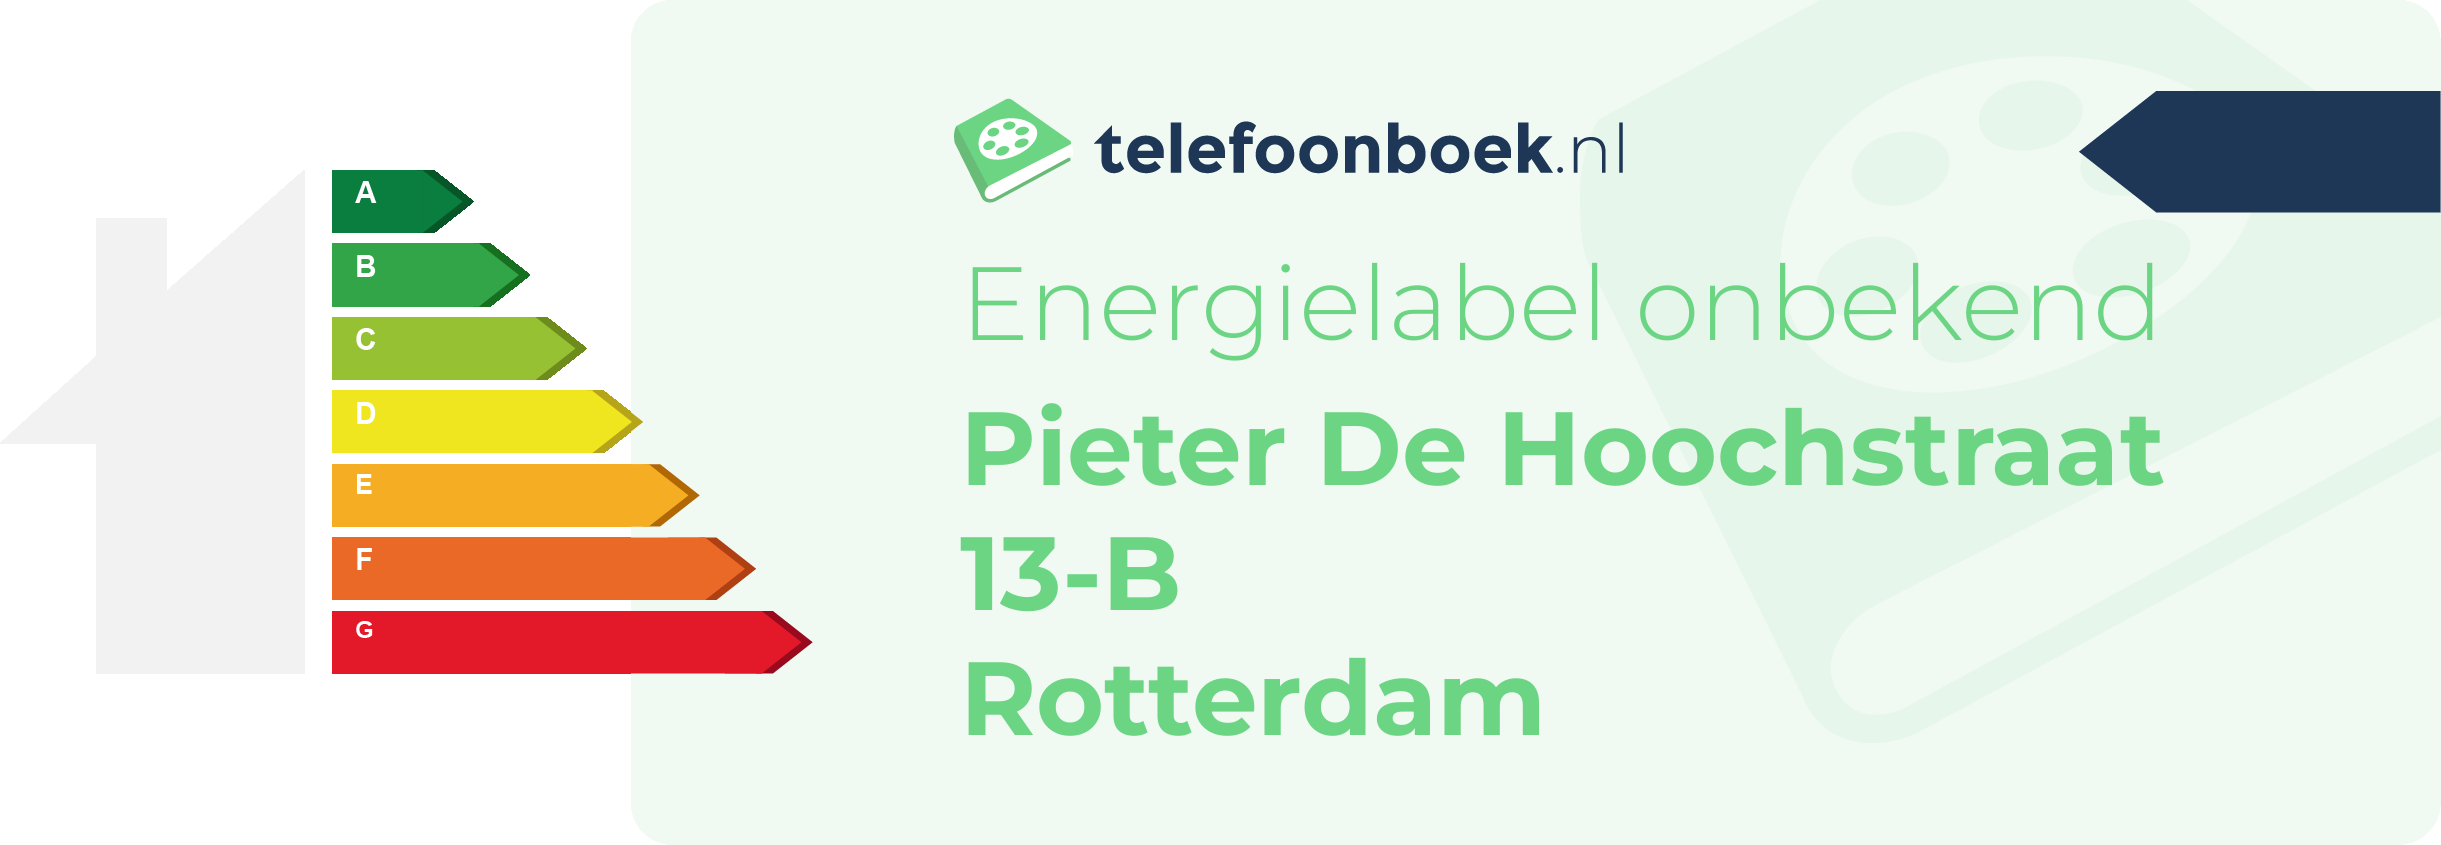 Energielabel Pieter De Hoochstraat 13-B Rotterdam